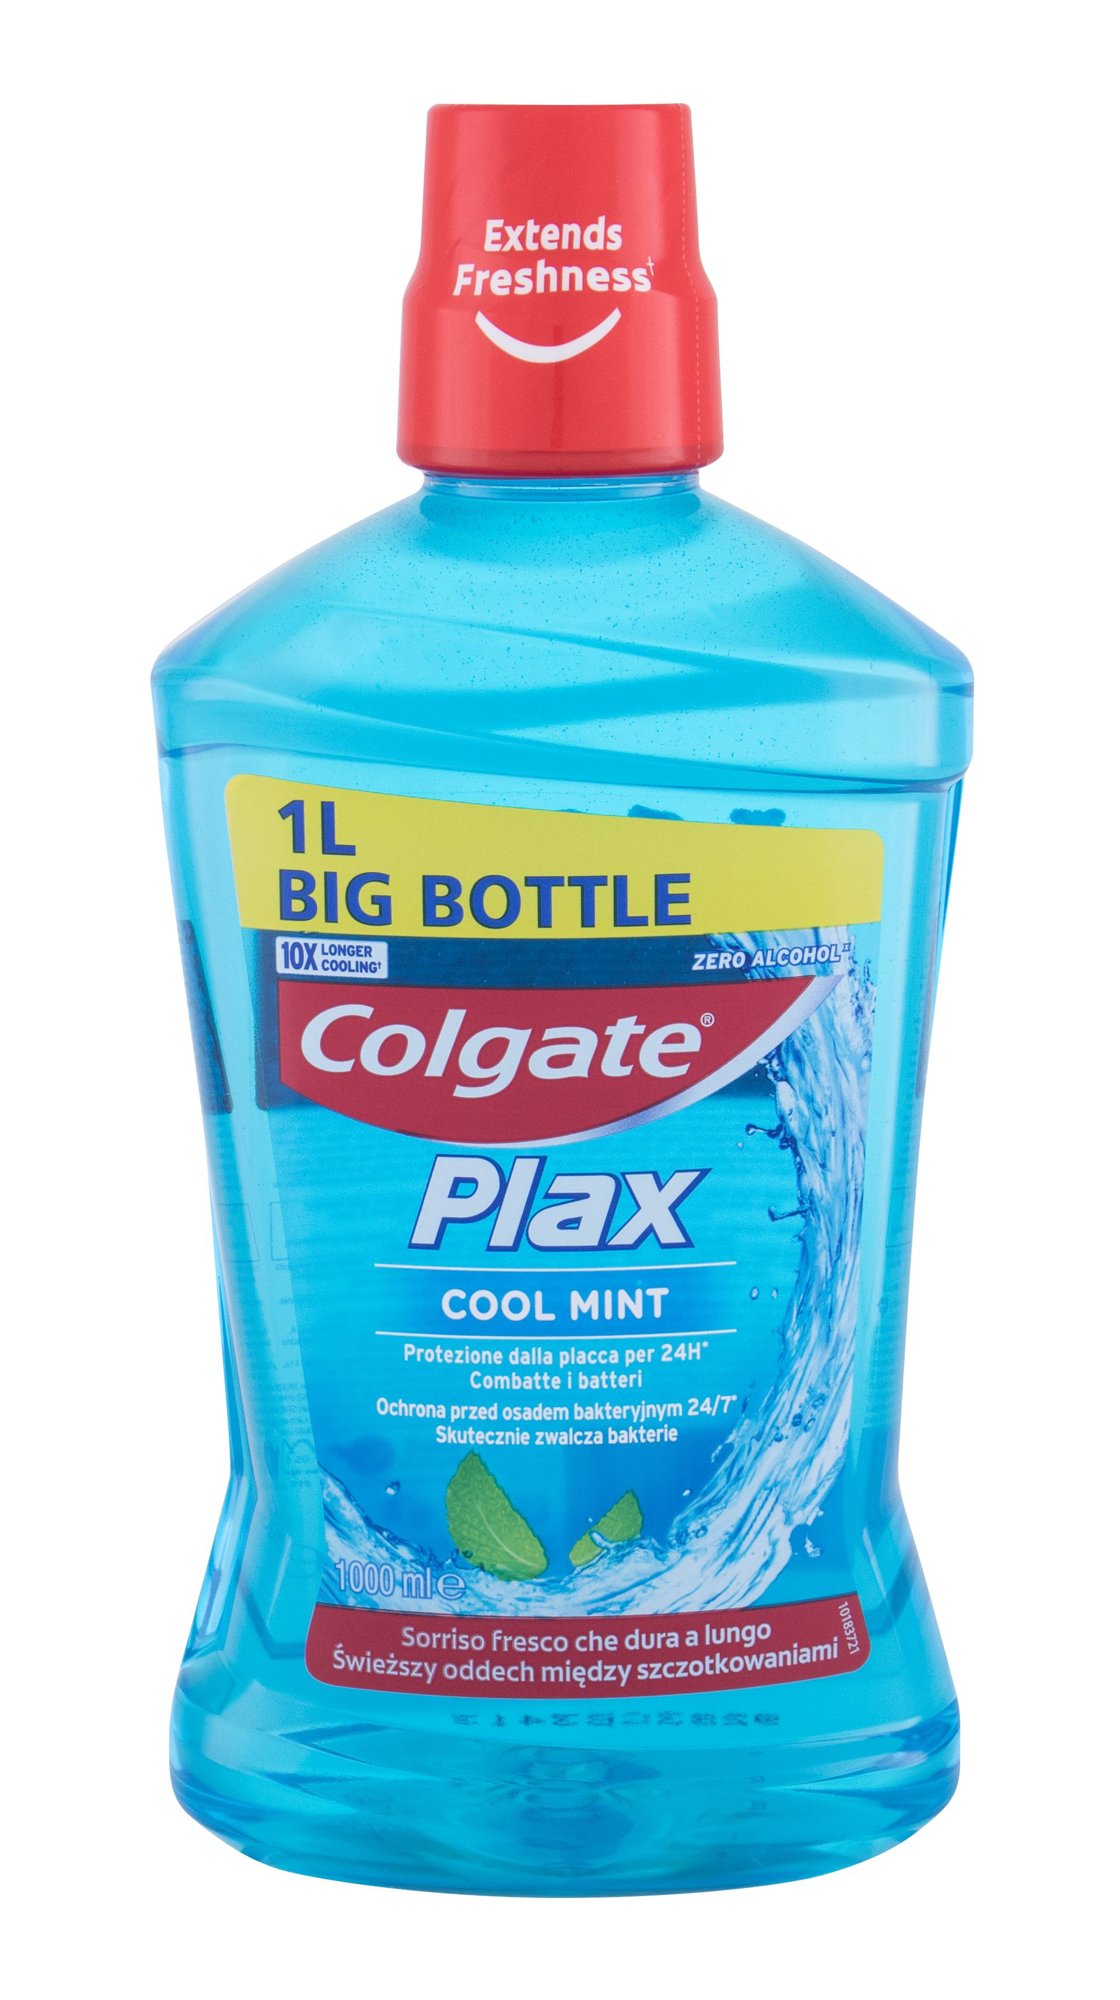 Colgate Plax Cool Mint dantų skalavimo skystis